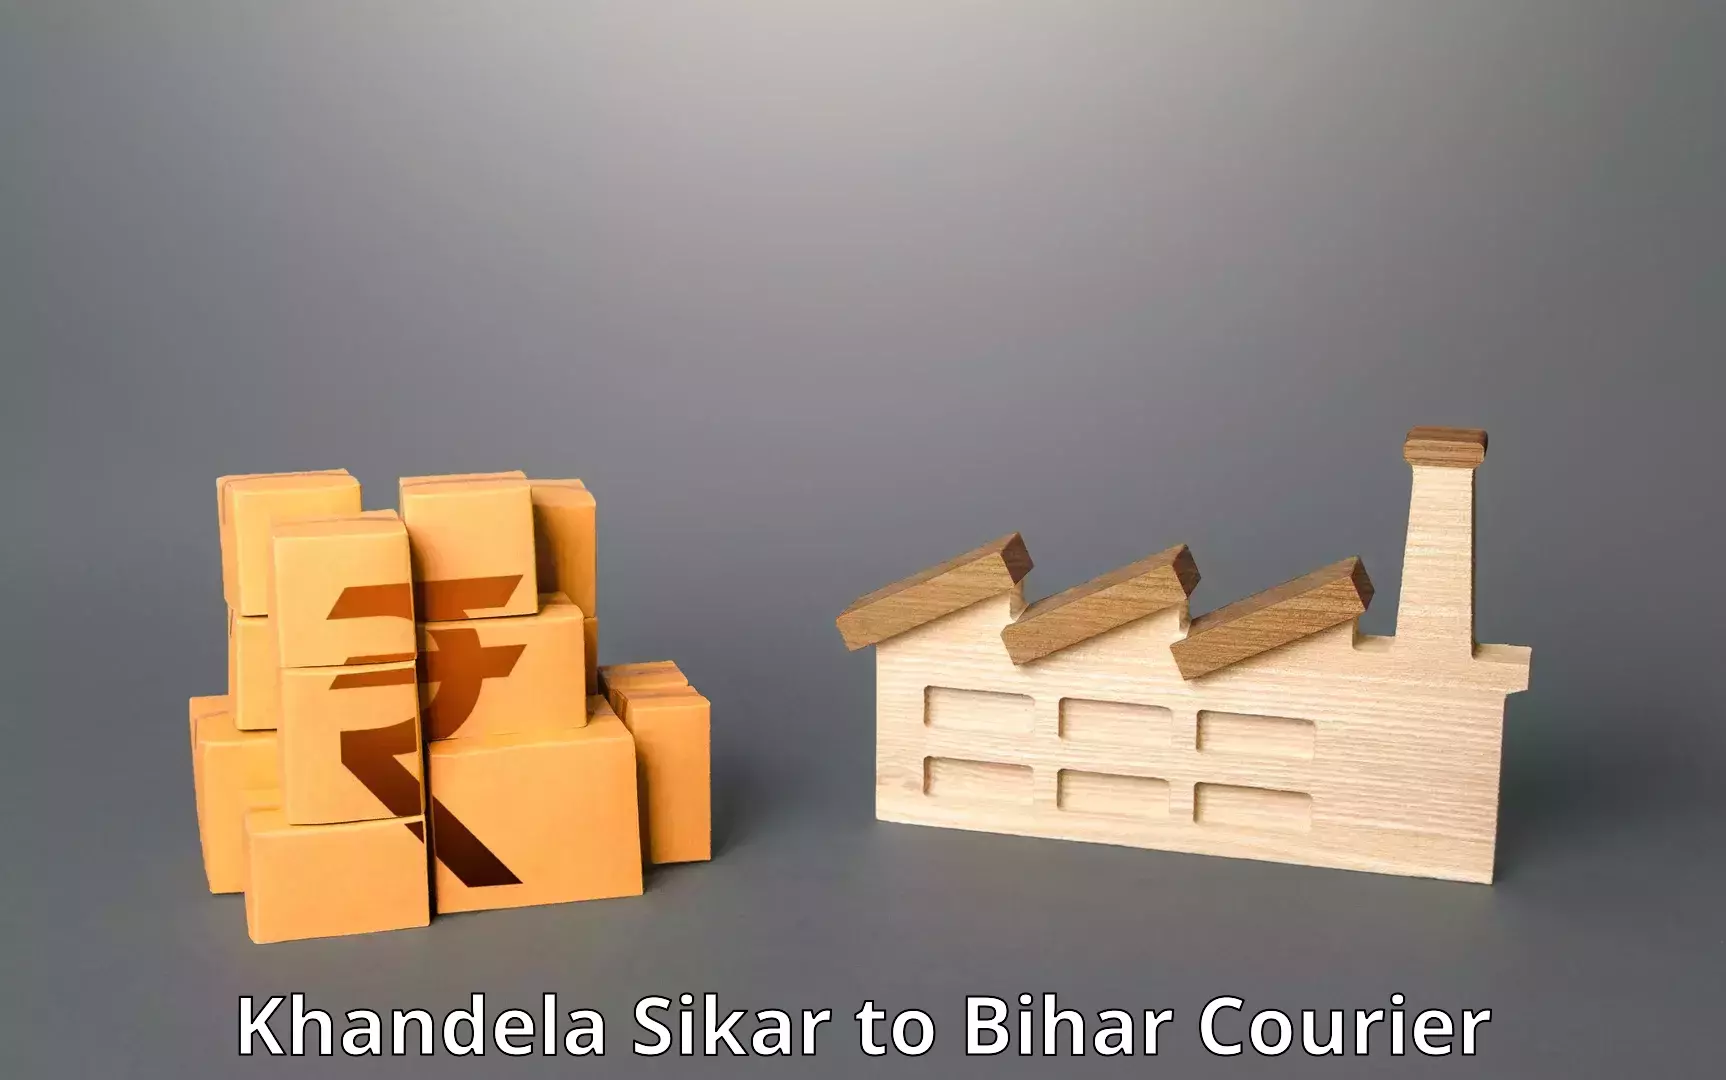 Full-service courier options Khandela Sikar to Araria